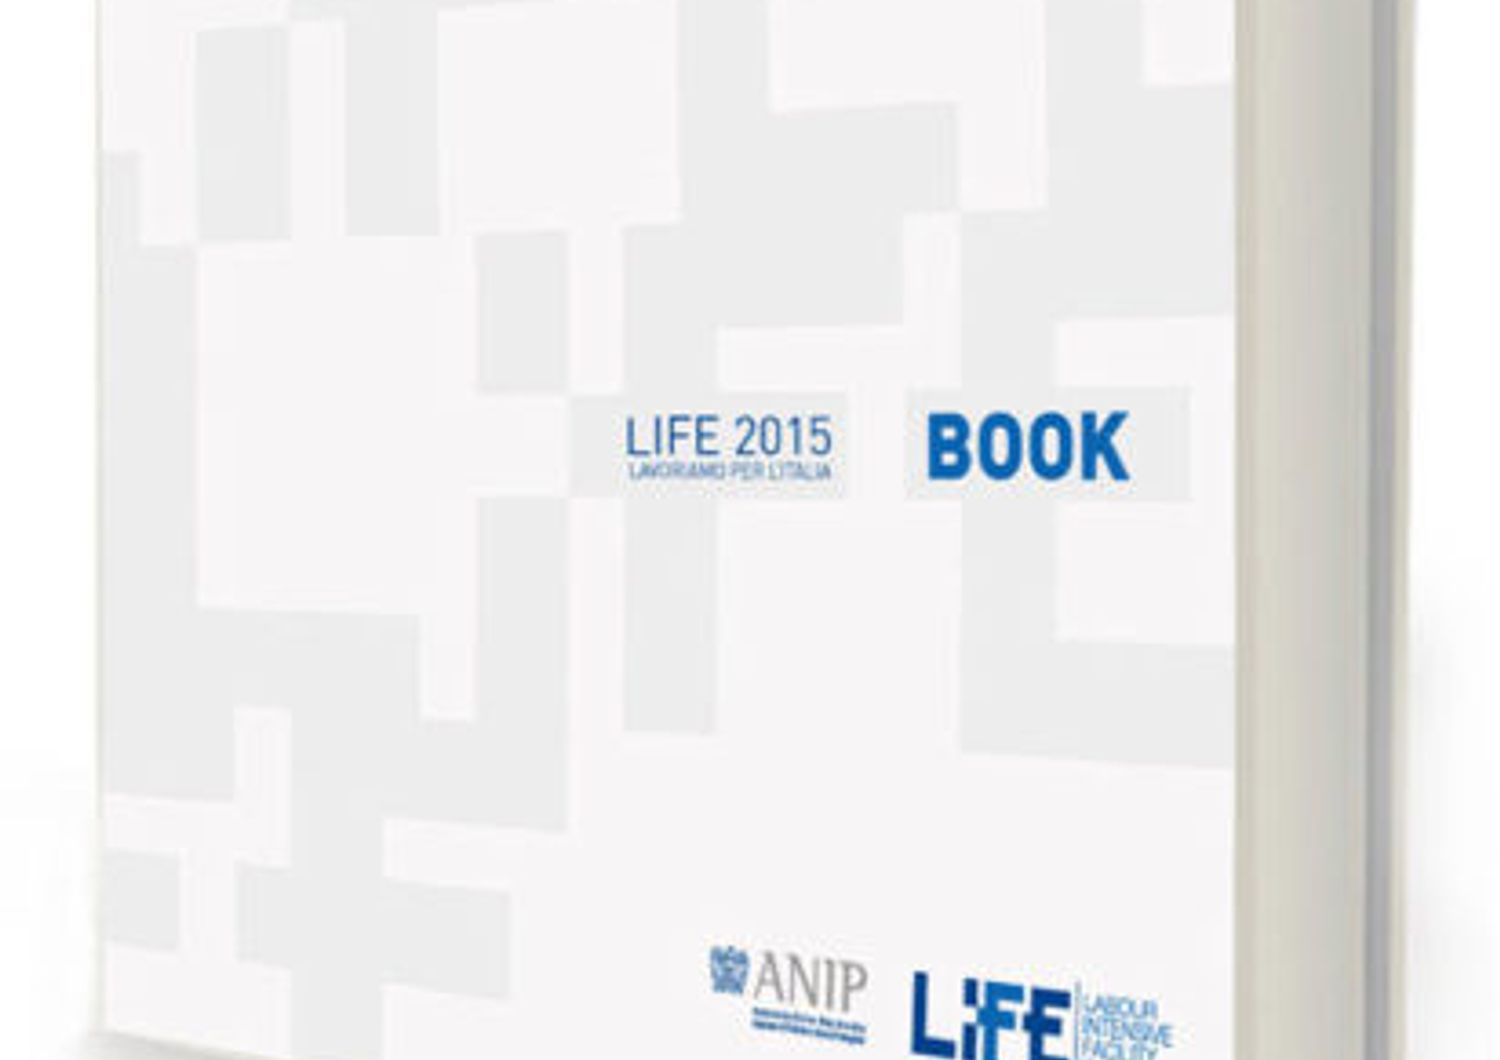 &nbsp;Anip lifebox 2015 - sito